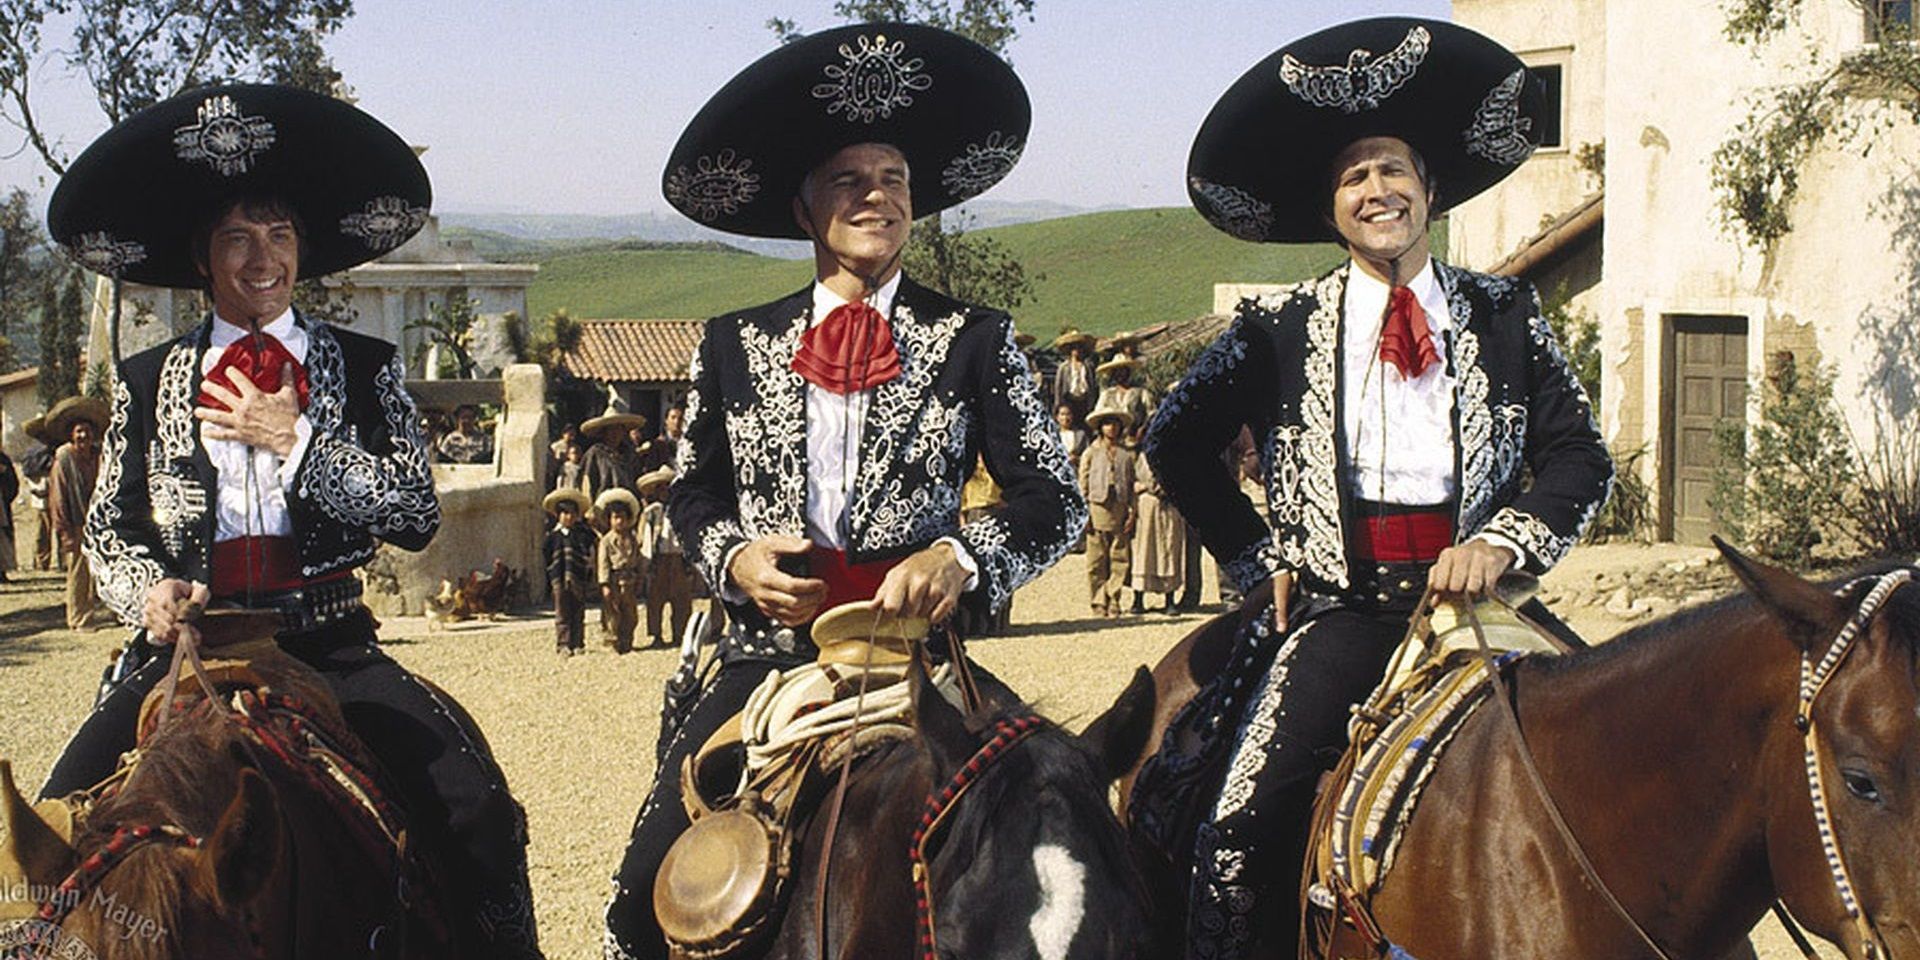 The Three Amigos on horseback